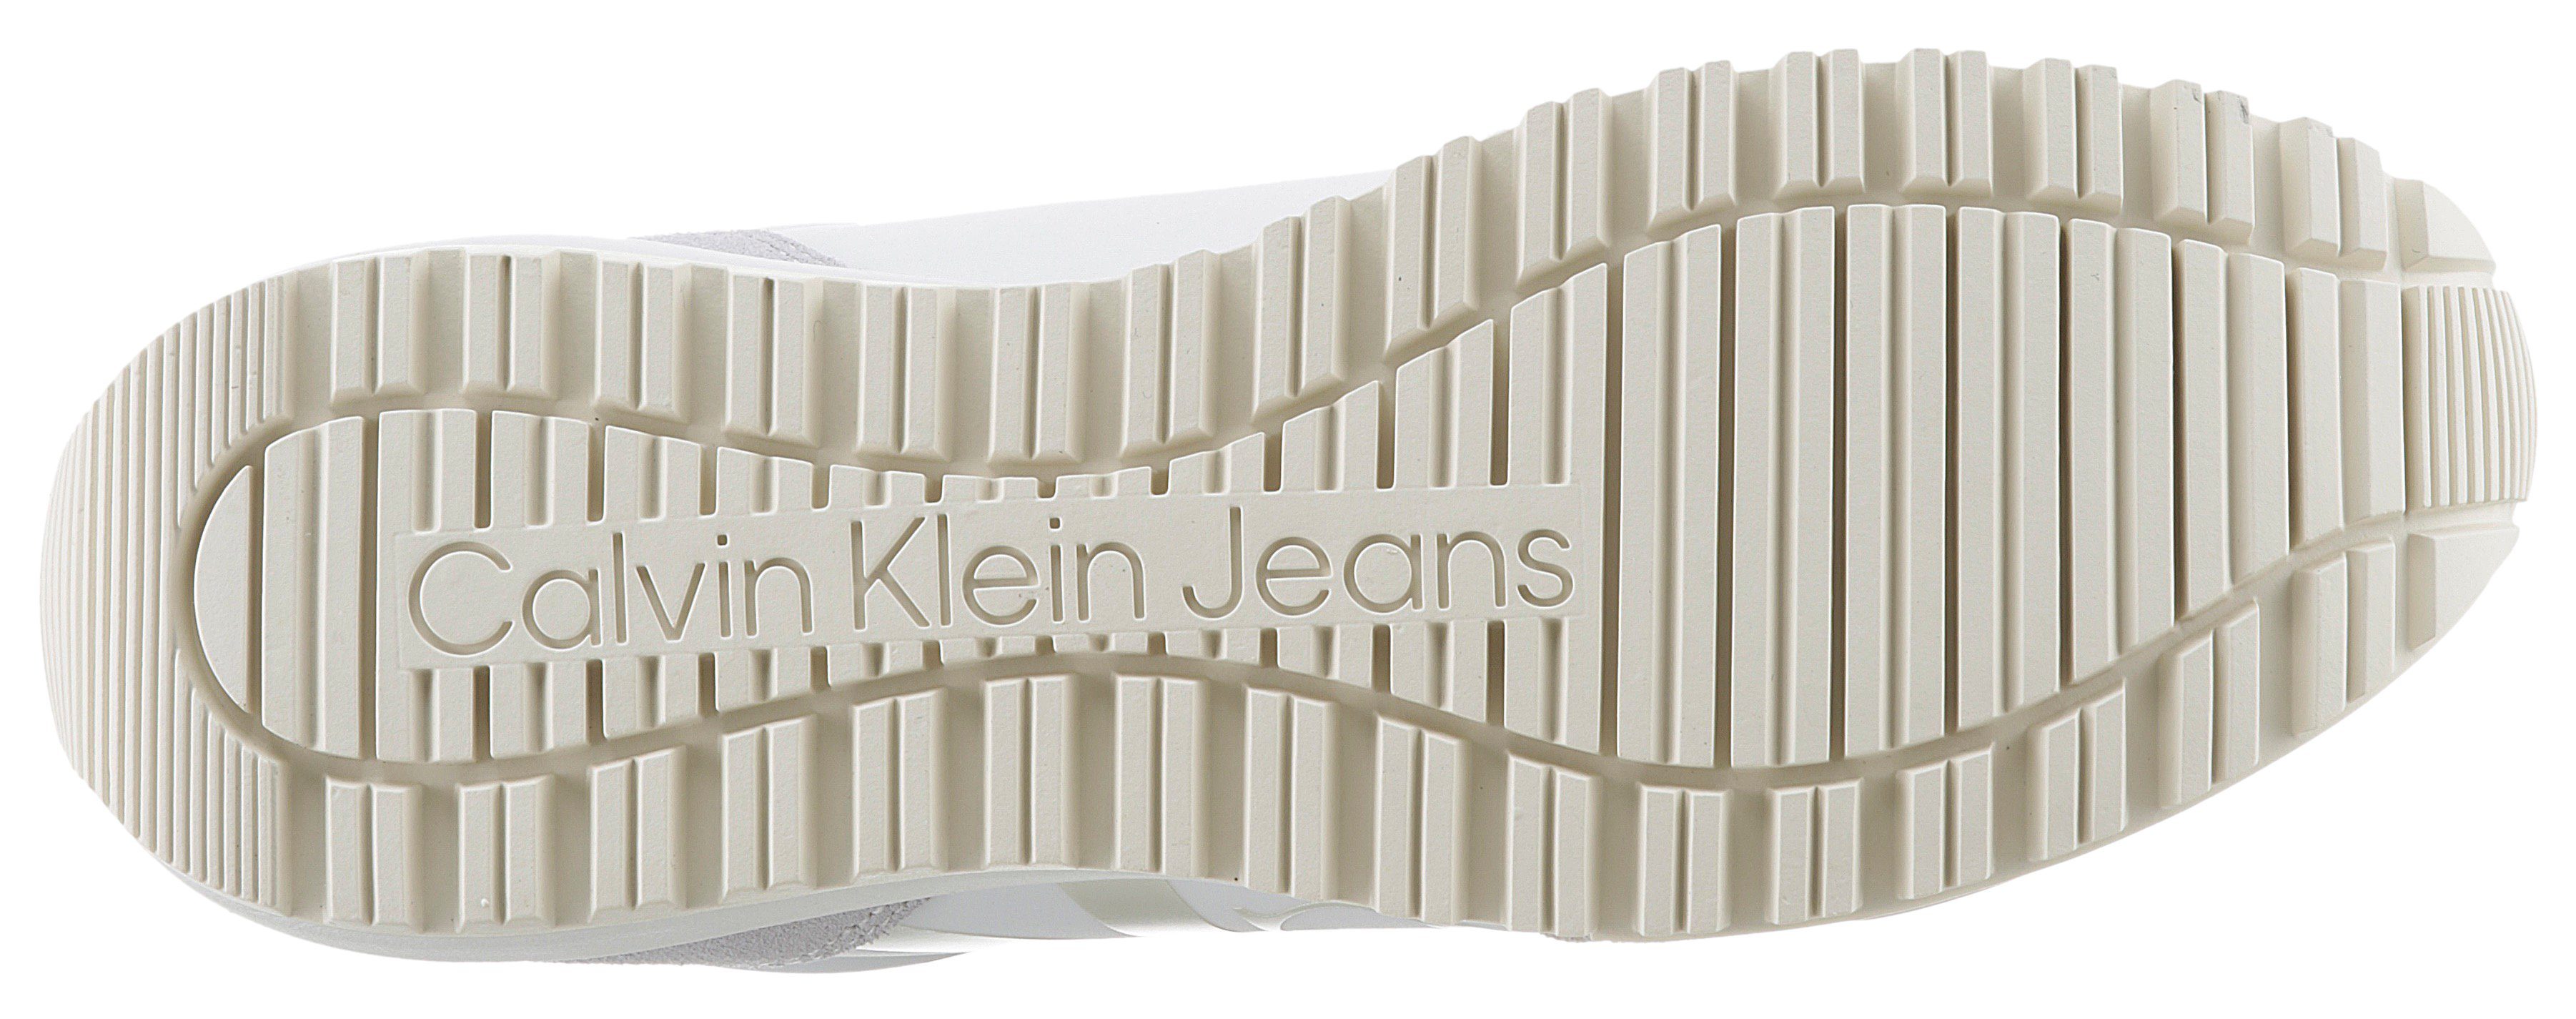 RUNNER LACEUP Jeans Profilsohle PEARL kombiniert MIX Klein Calvin mit TOOTHY Sneaker weiß